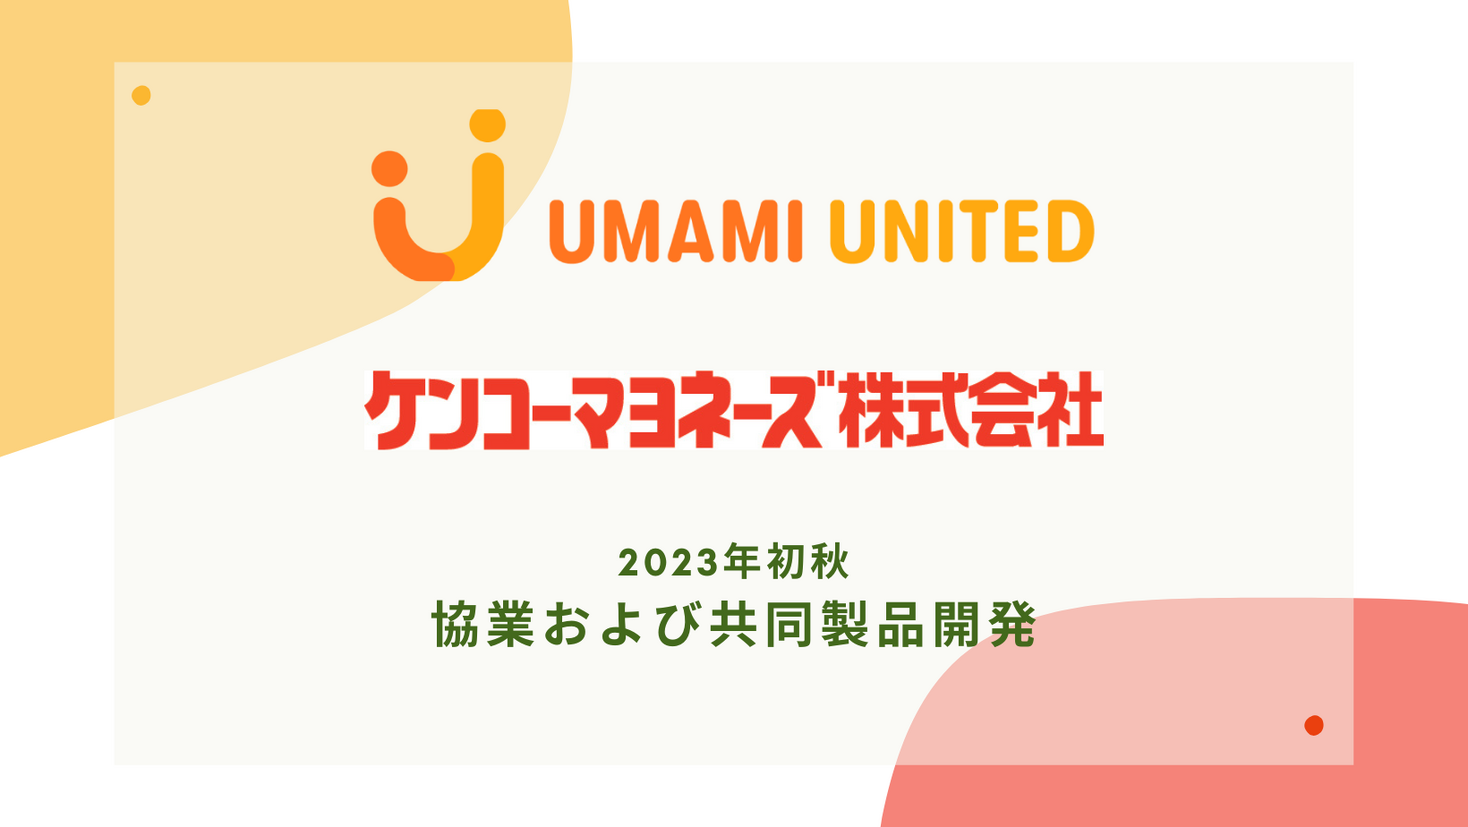 UMAMI UNITED JAPAN とケンコーマヨネーズ株式会社「植物性たまご風商品」オープンイノベーションによる共同製品開発を開始。